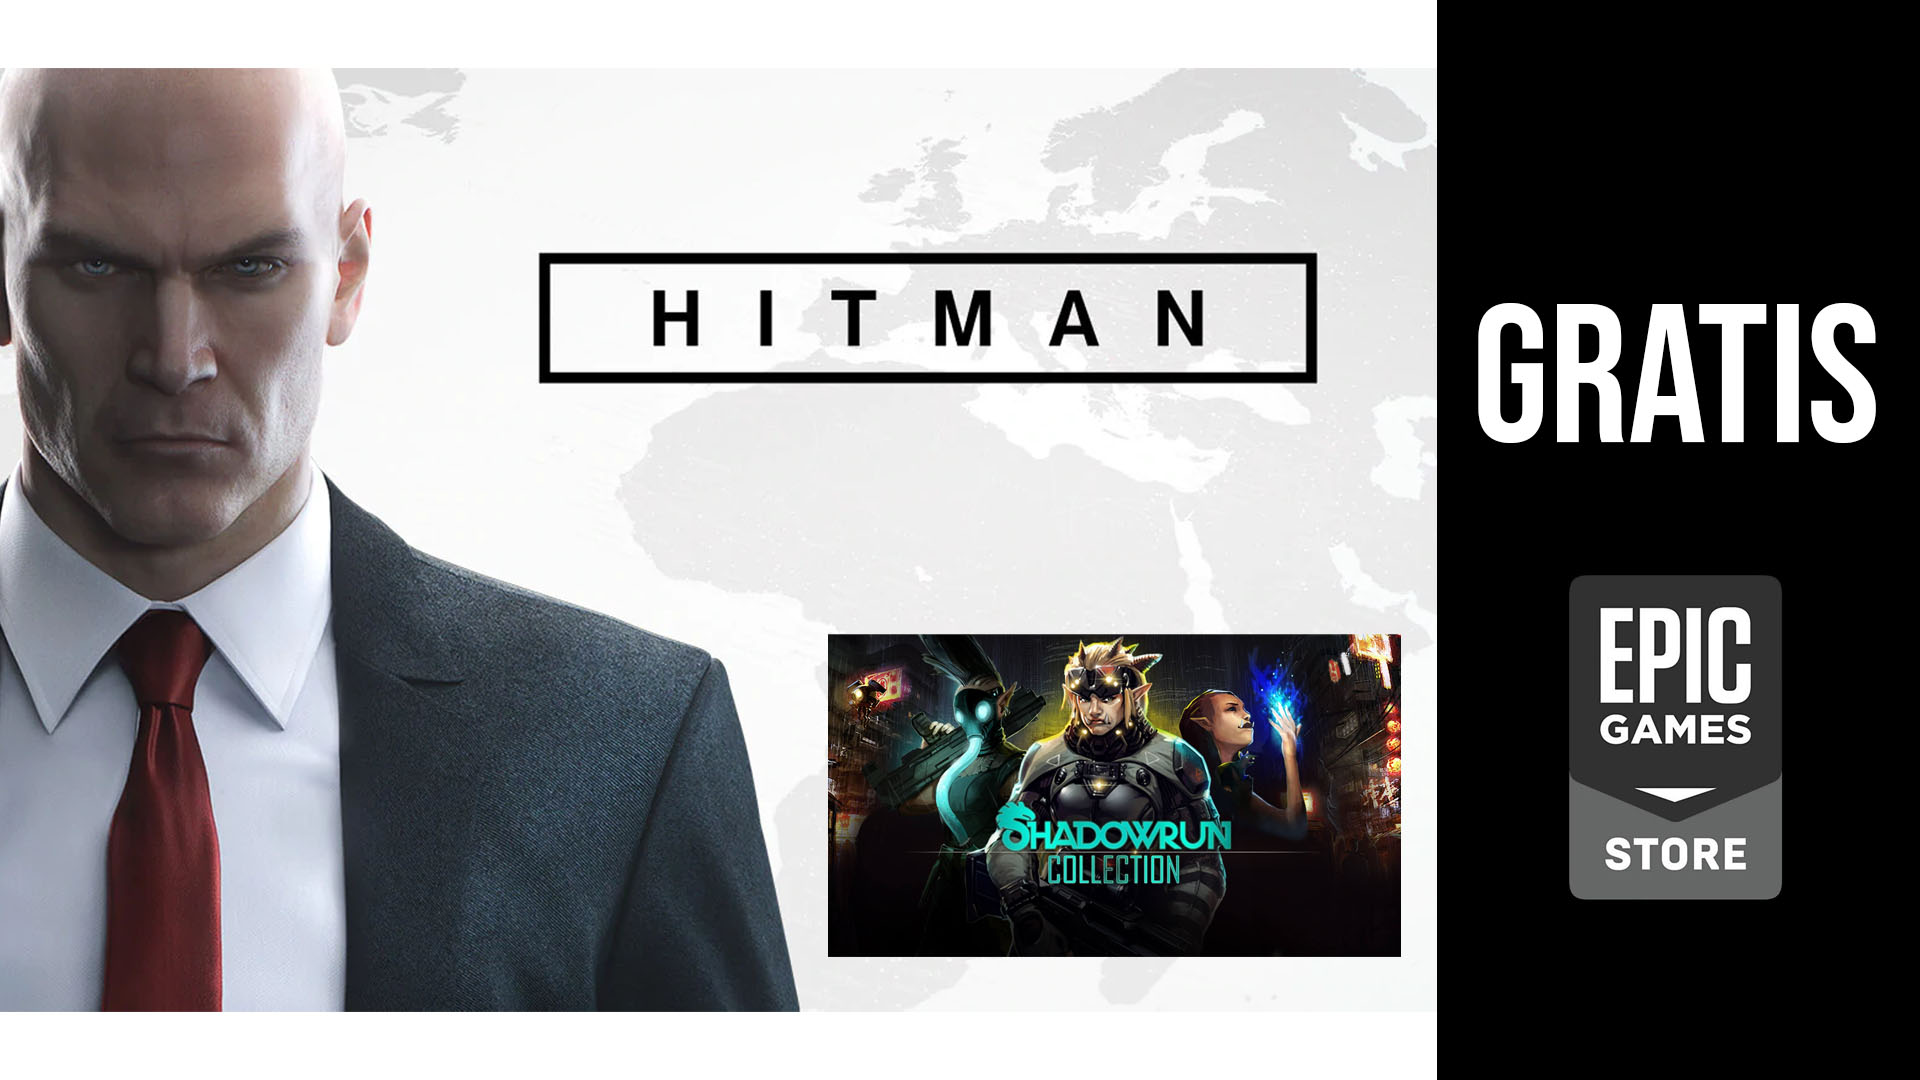 HITMAN (2016) e Shadowrun Collection estão gratuitos na Epic Games Store